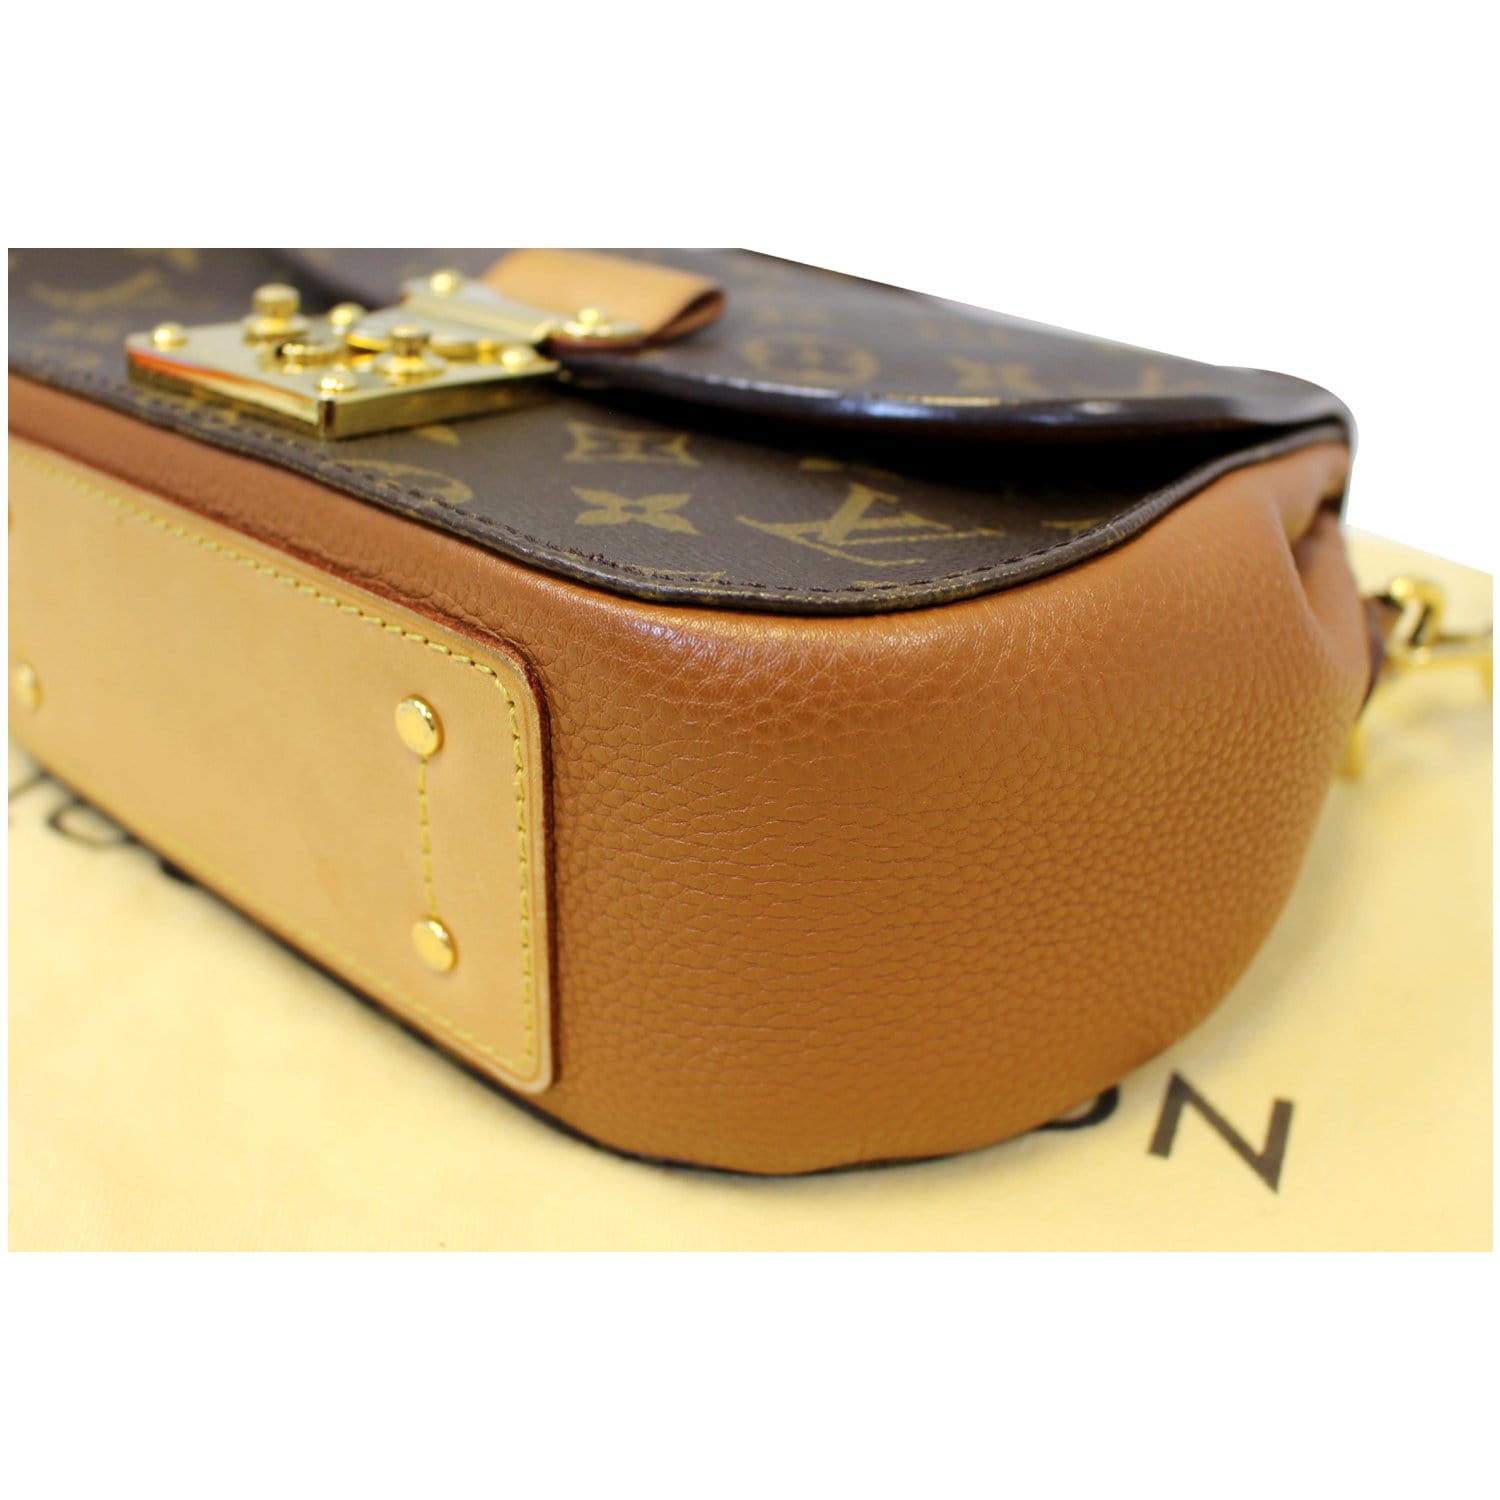 Eden leather handbag Louis Vuitton Brown in Leather - 17643588